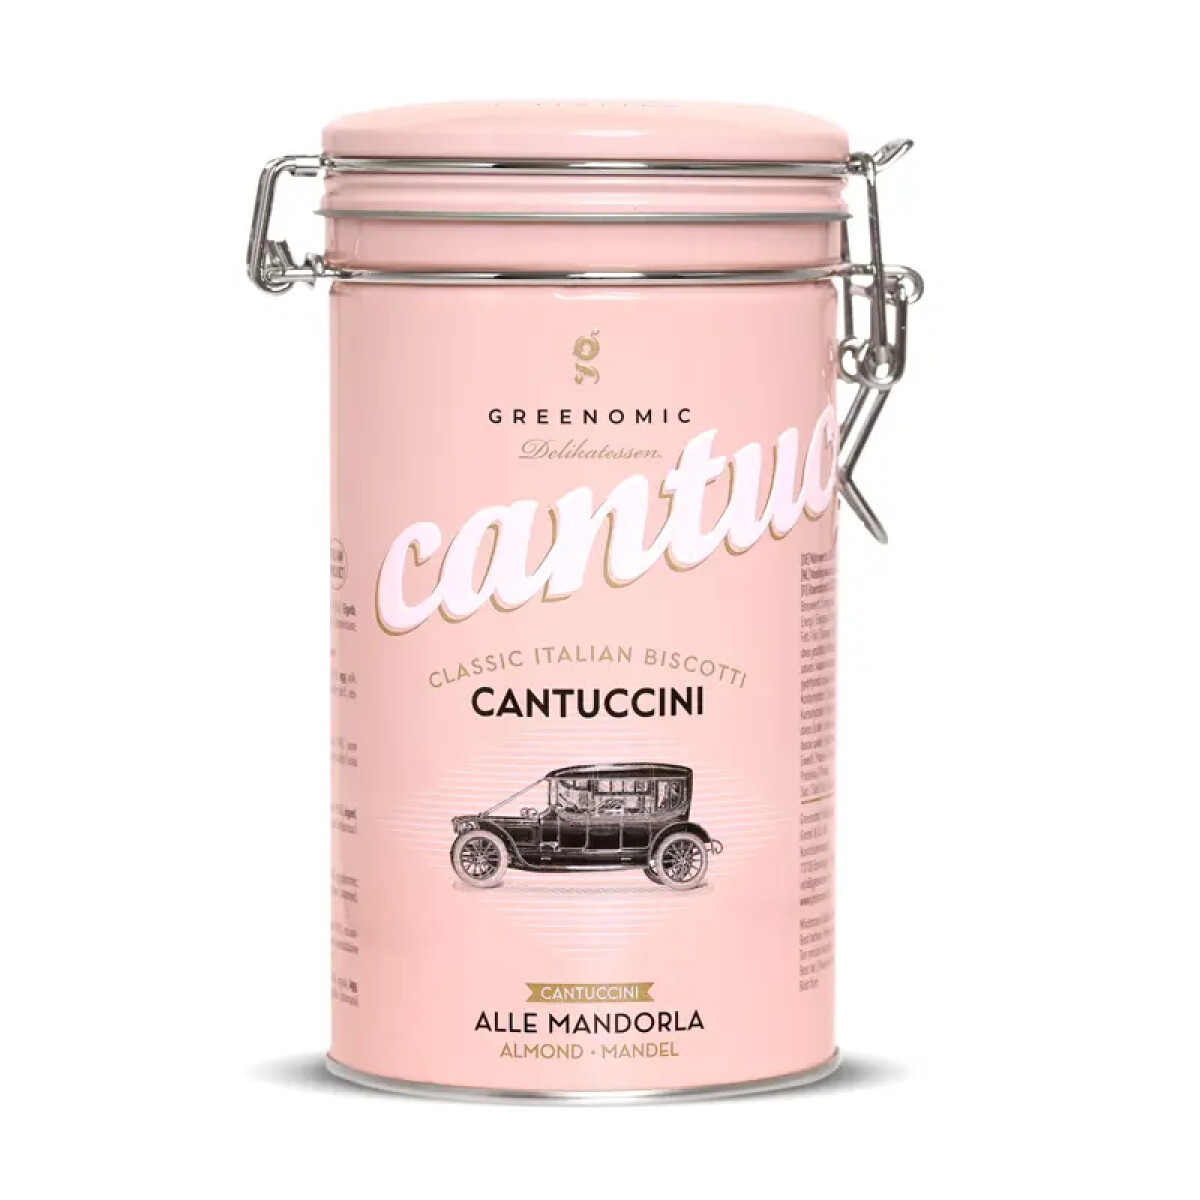 Cantucci shop online